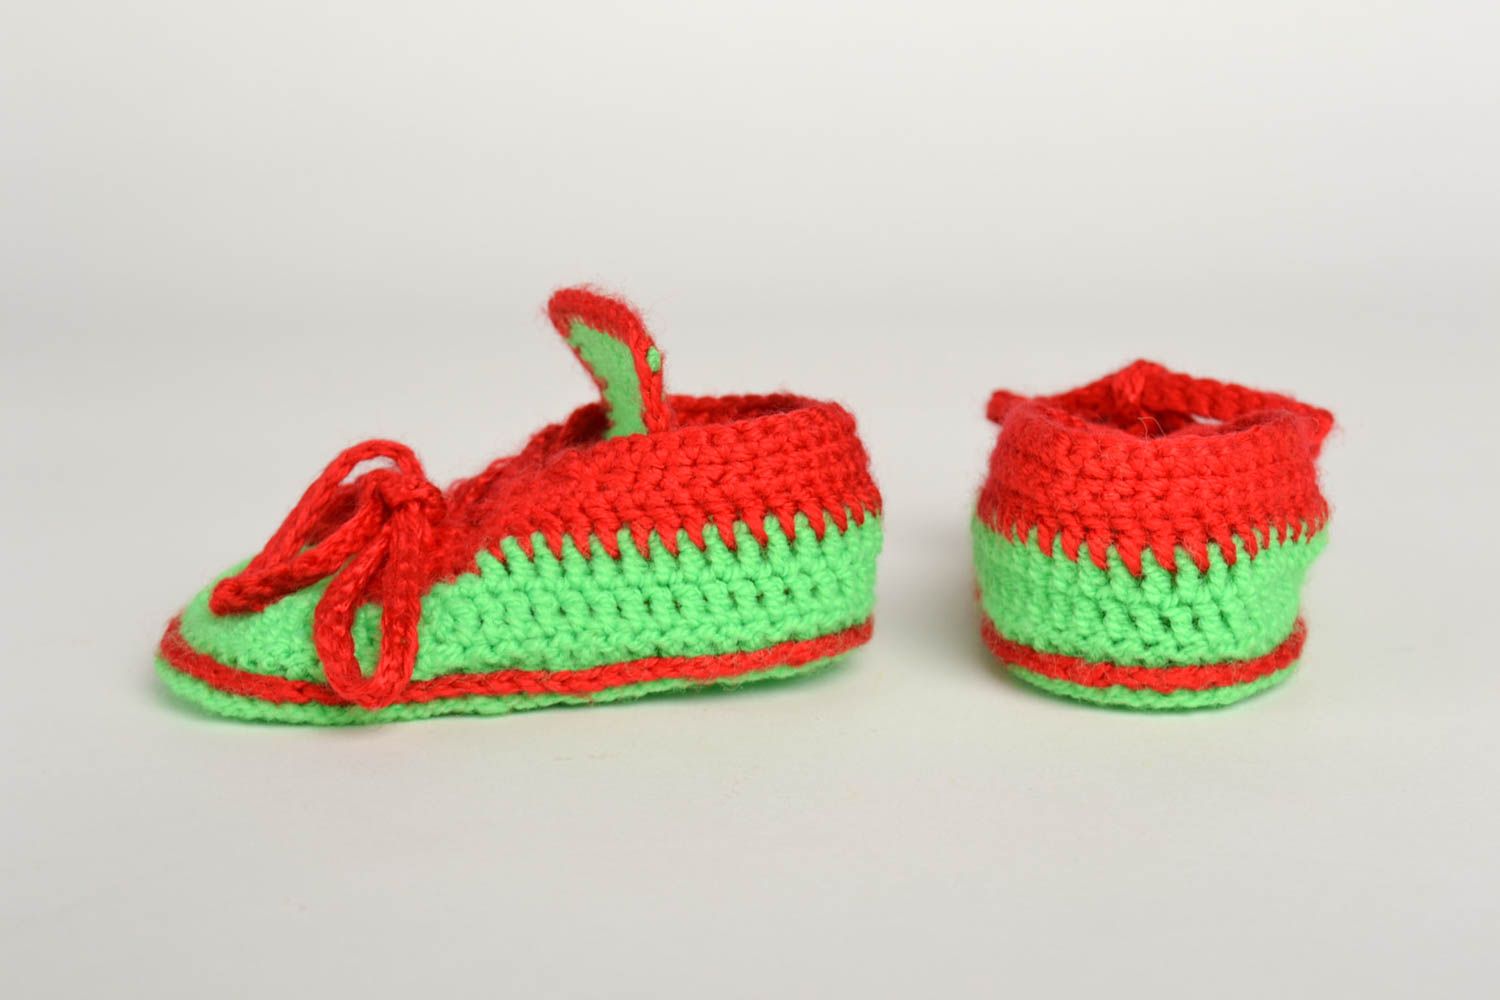 Handmade crochet baby booties crochet ideas cute baby outfits gift ideas photo 3